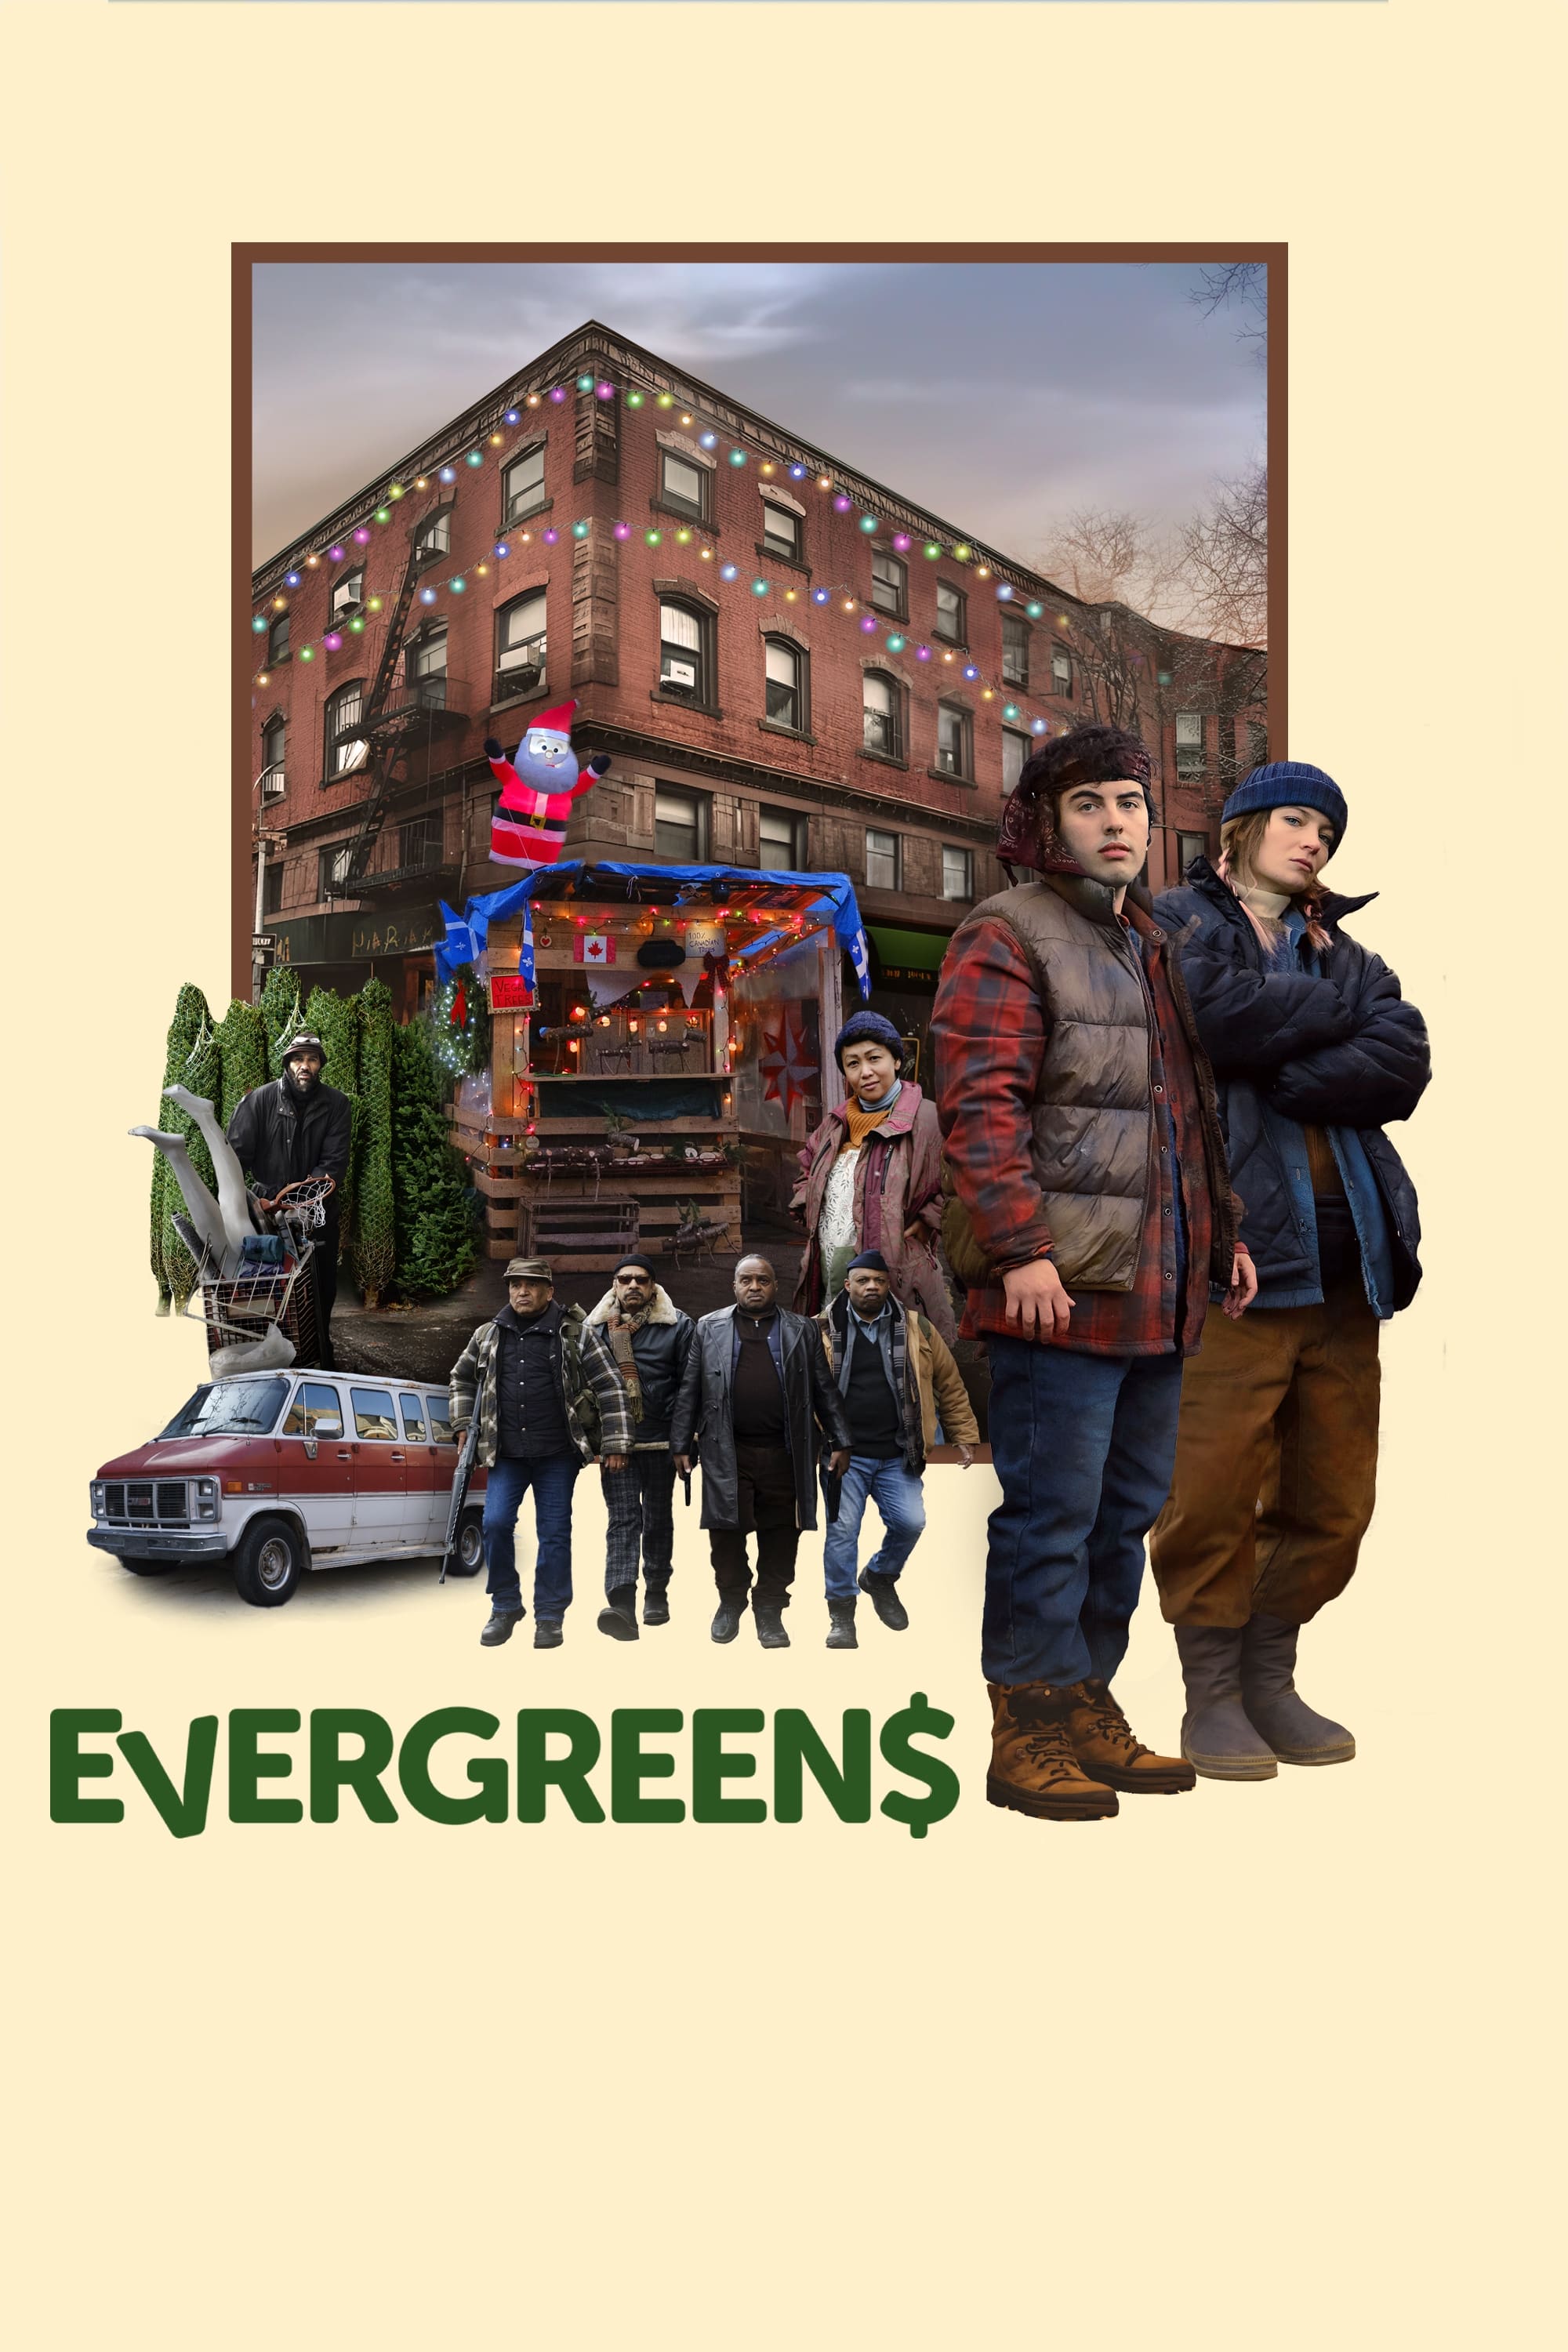 Evergreen$